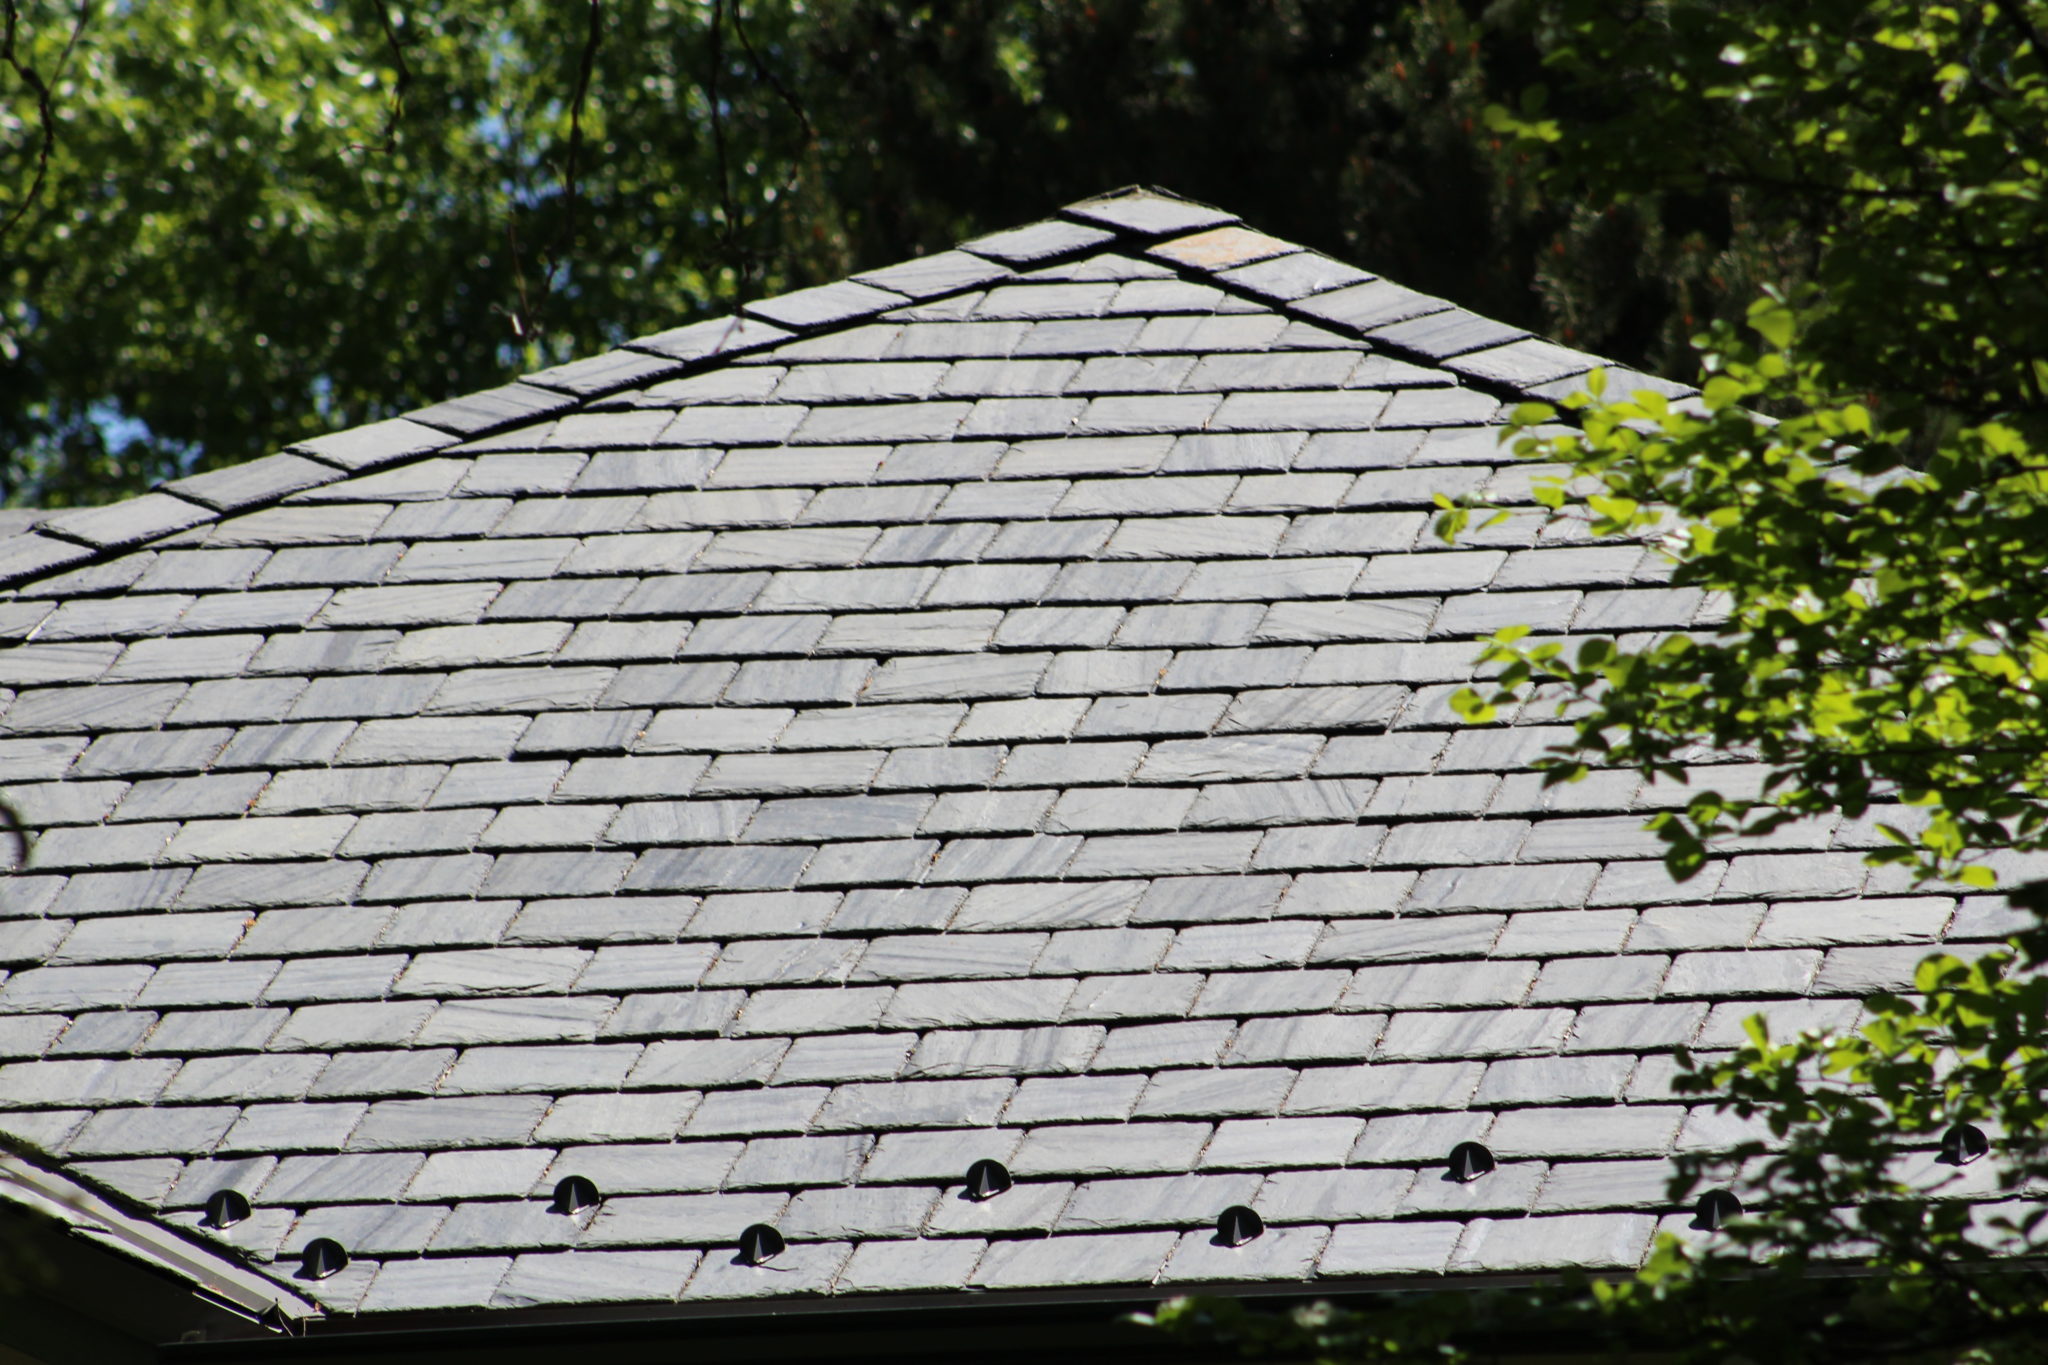 Slate Tile Roof close up